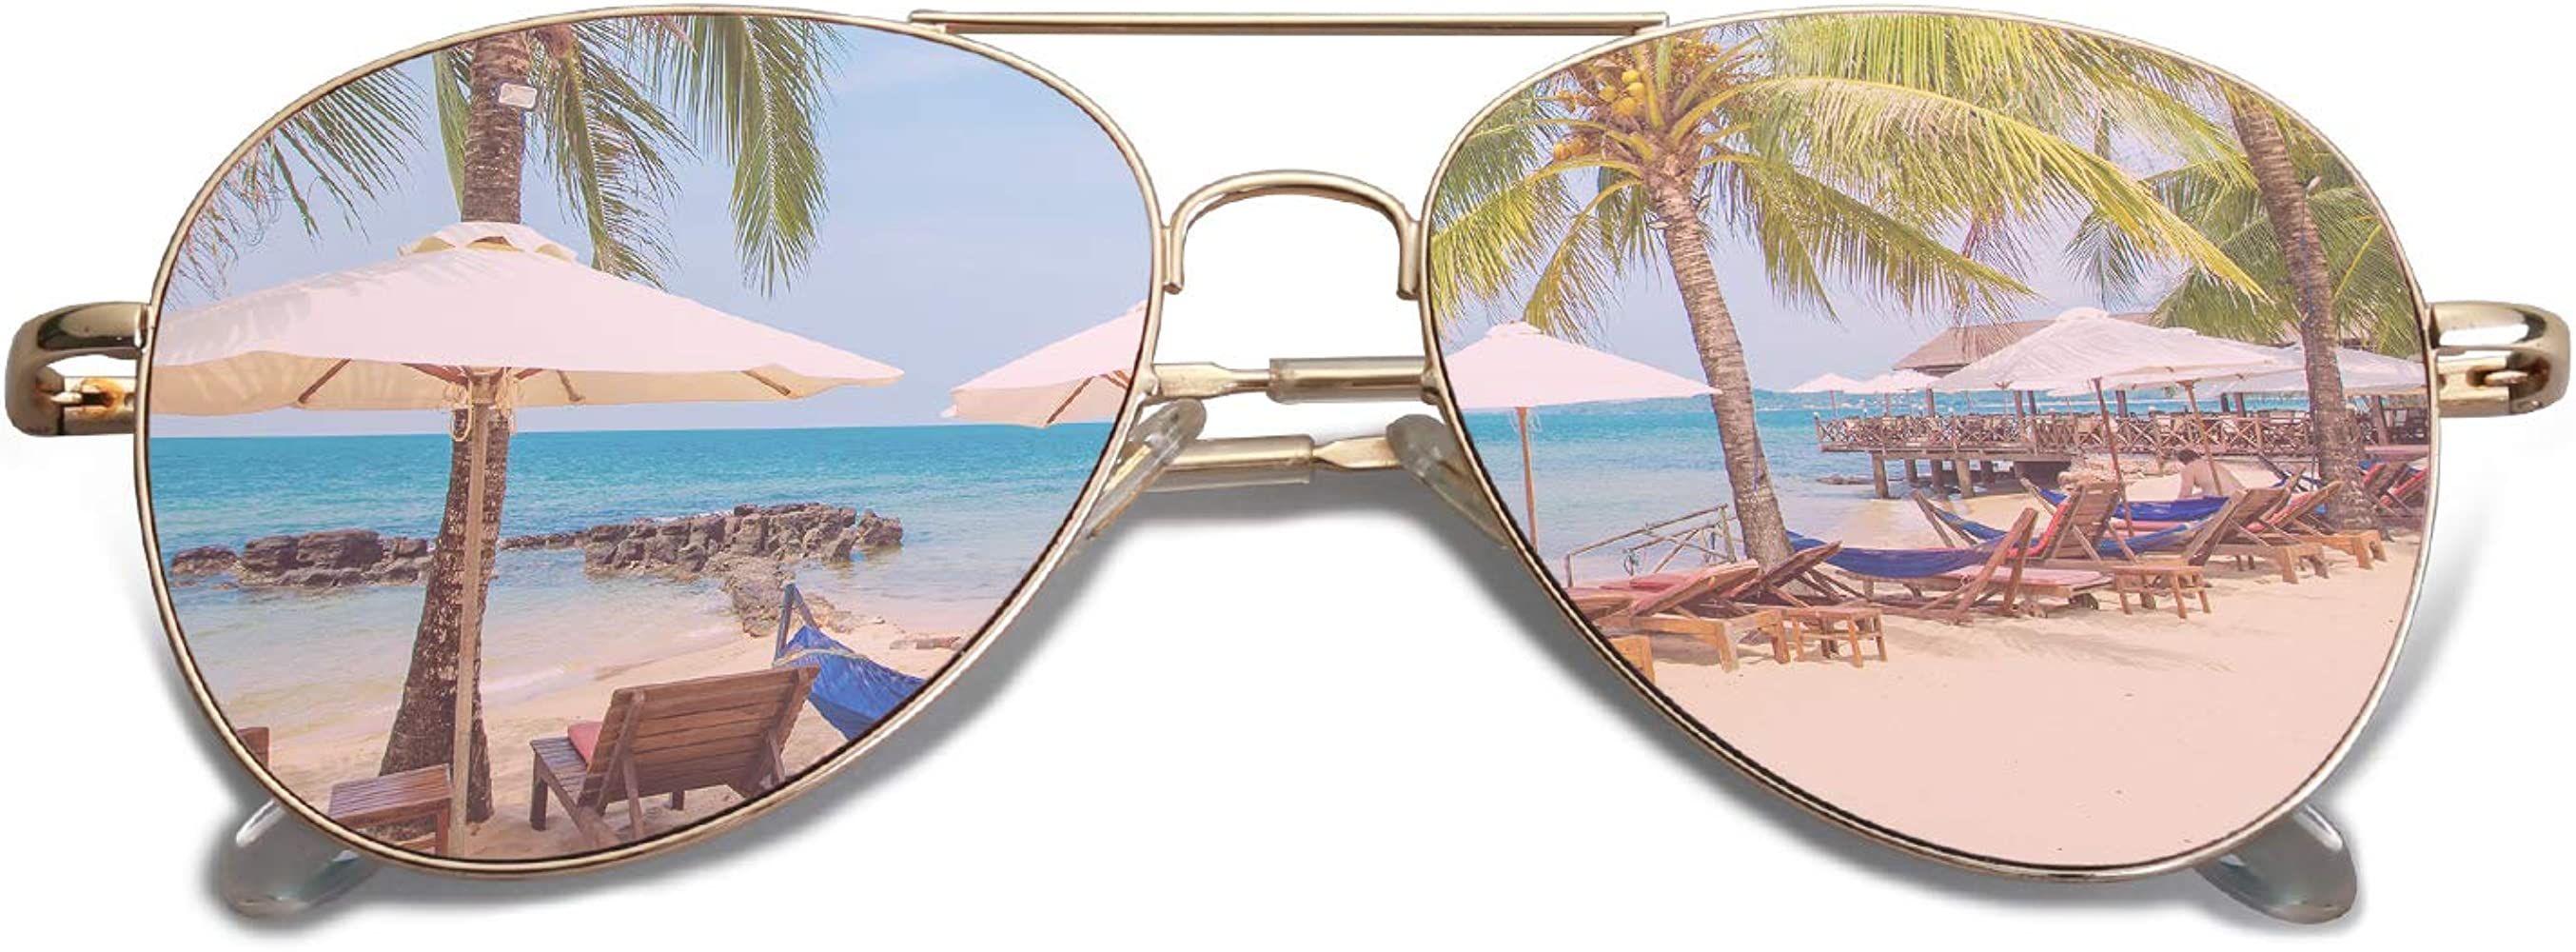 SOJOS Classic Aviator Sunglasses for Women Men Metal Frame Spring Hinges SJ1030 | Amazon (US)